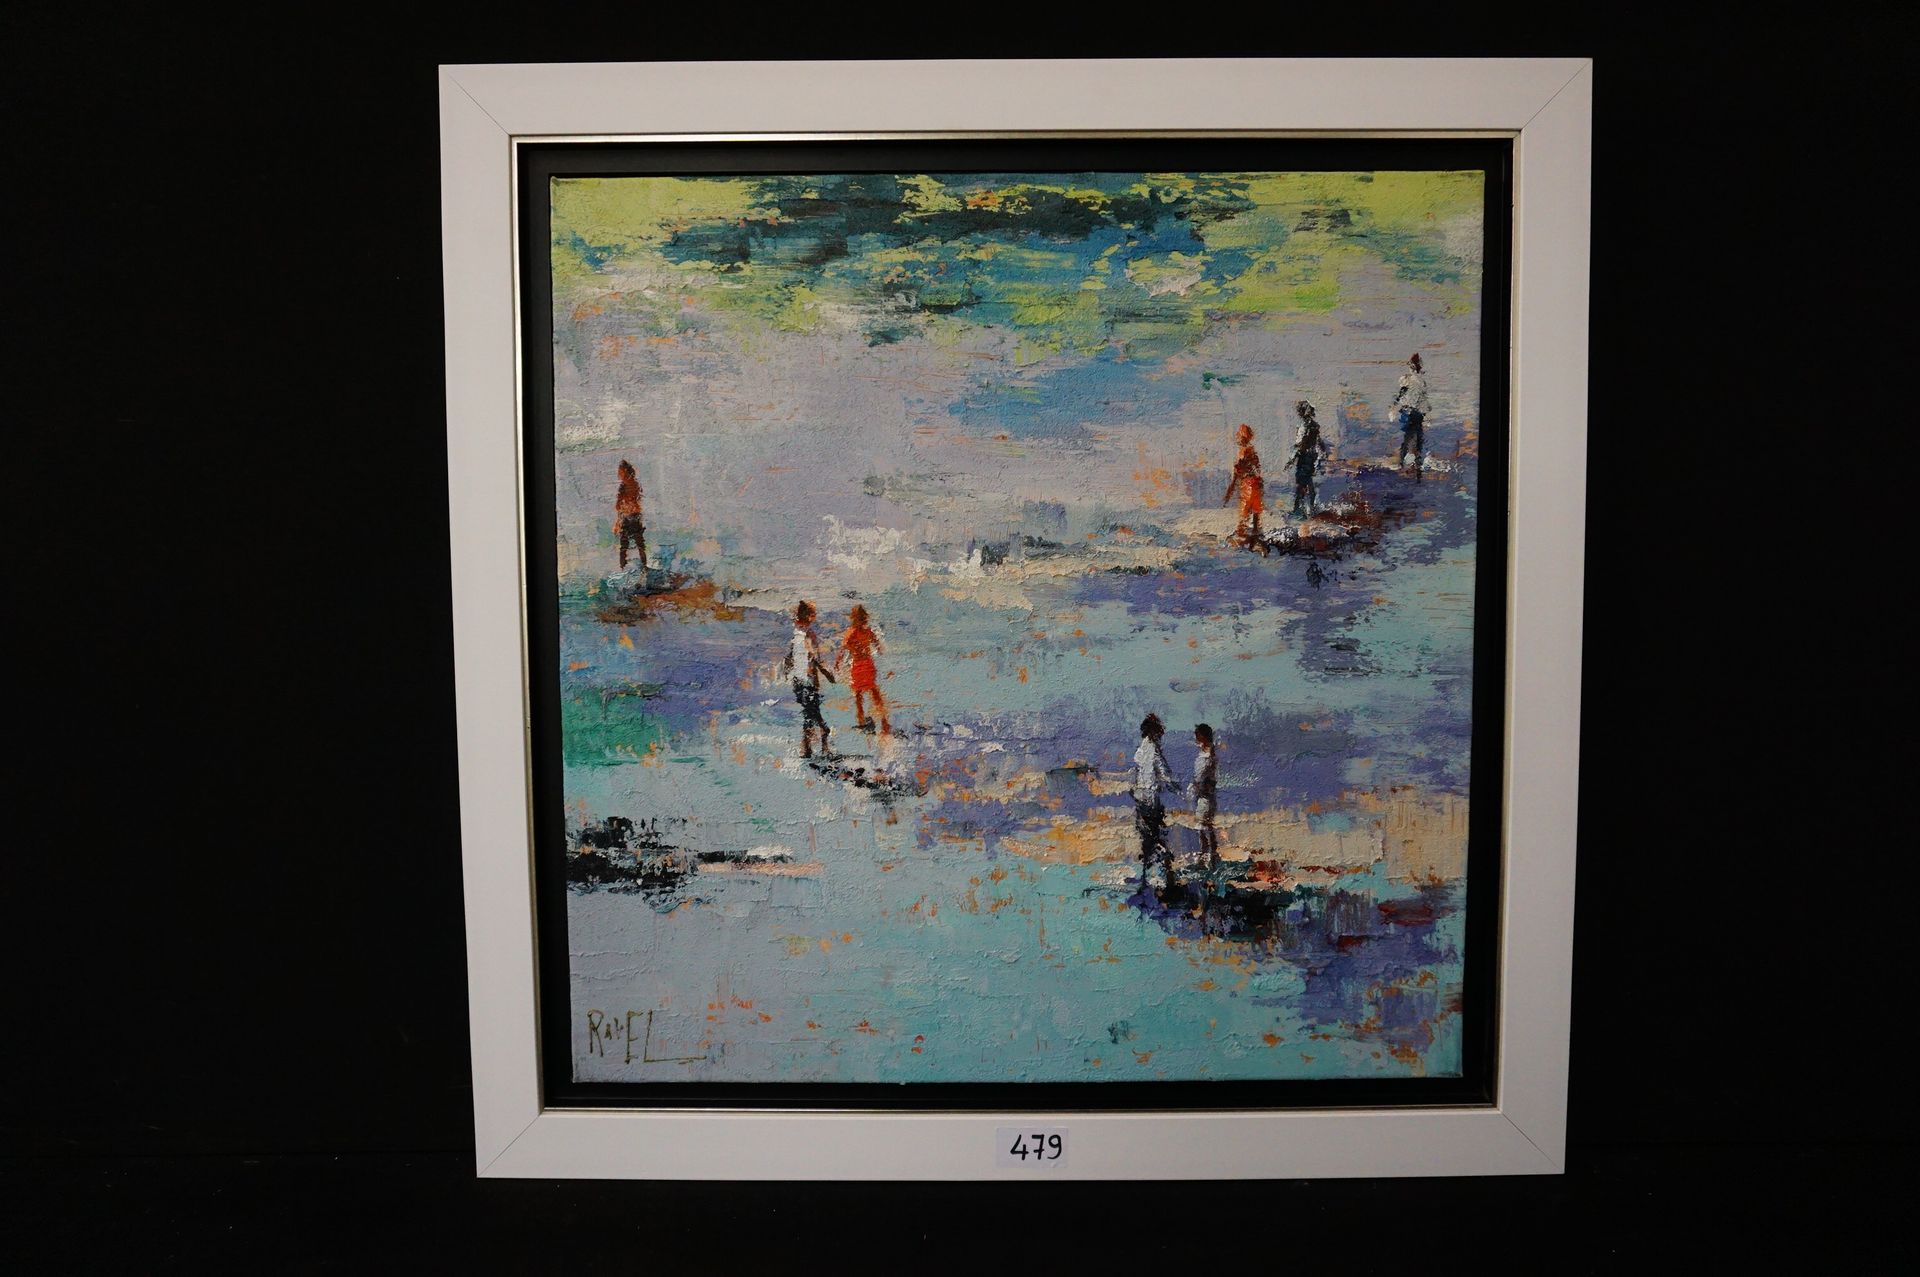 RAVEL (20ste eeuw) "Sunday walk on the beach" - Oil on canvas - Signed - 80 x 80&hellip;